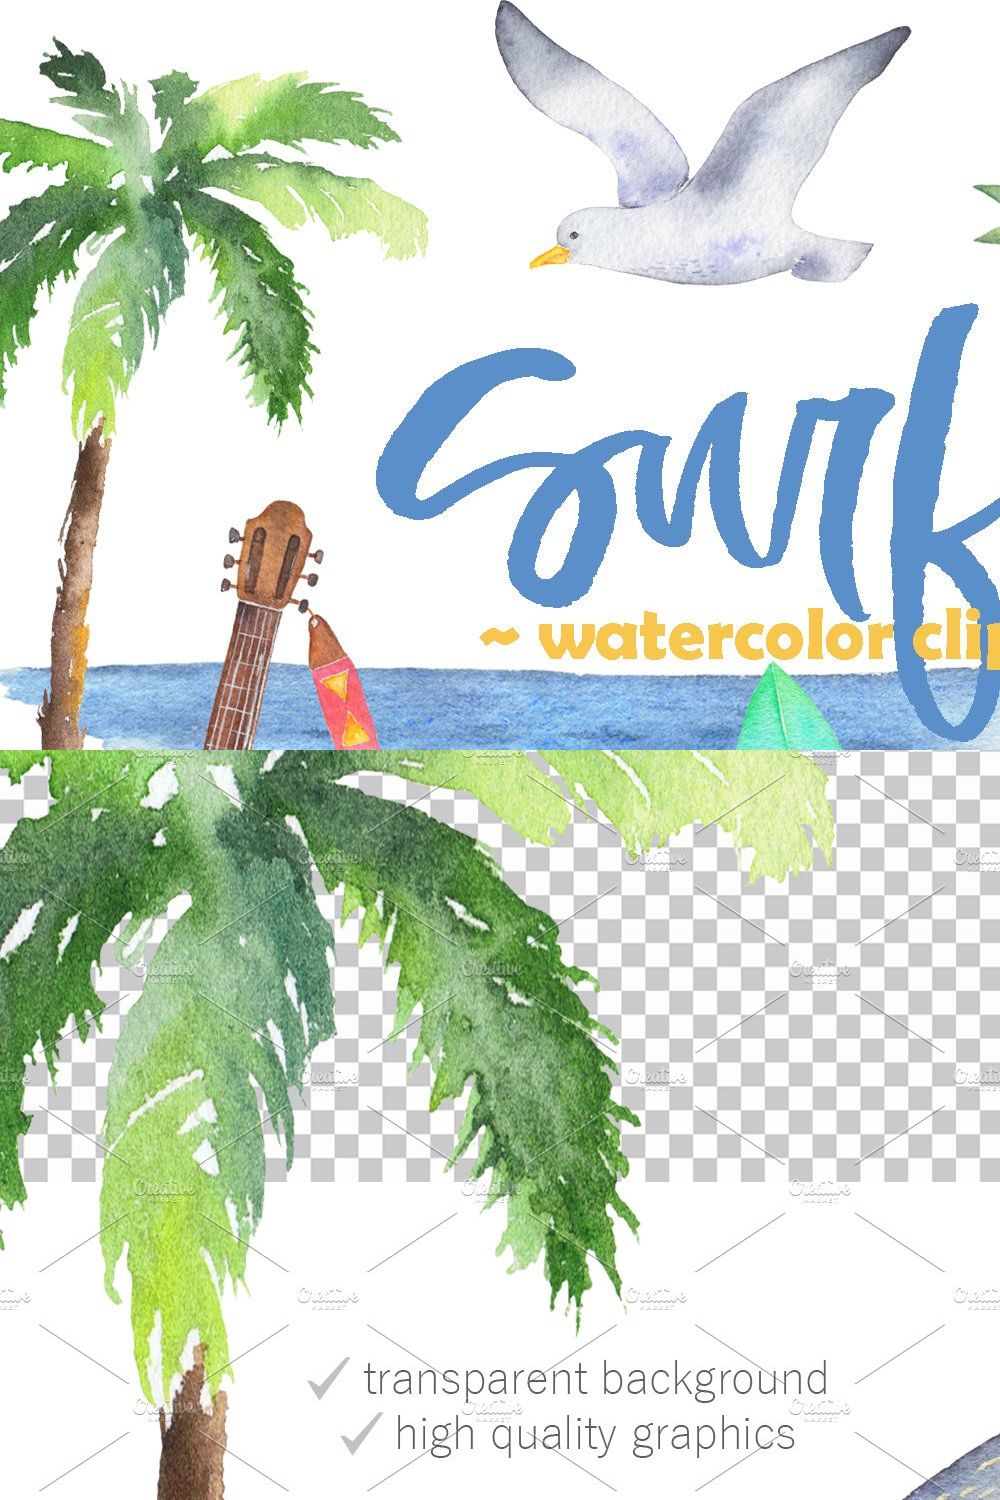 Surfing watercolor clipart set pinterest preview image.